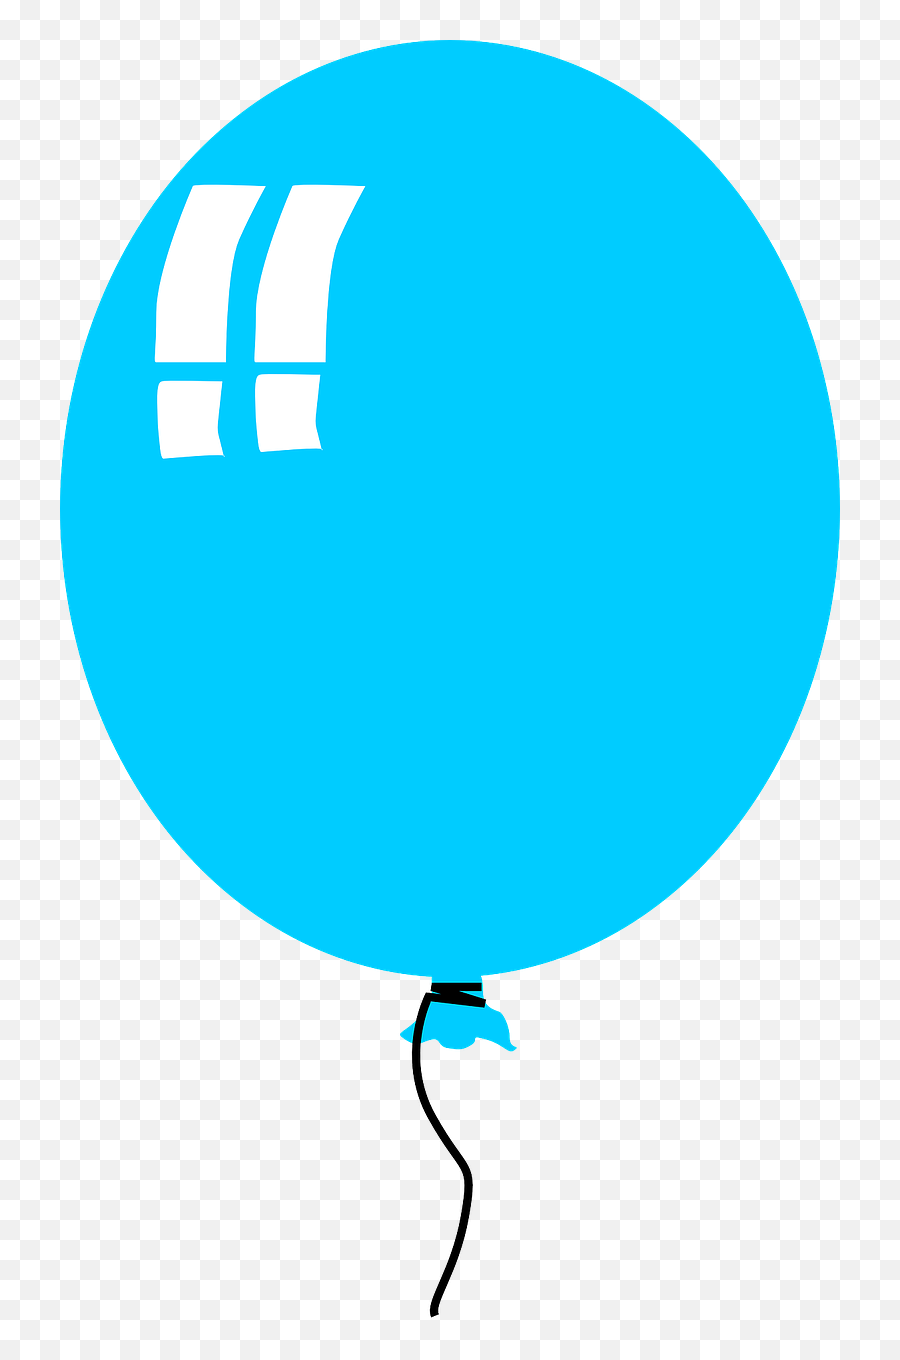 Balloon Clip Art - Vector Clipart Panda Free Clipart Images Emoji,Ballons Clipart